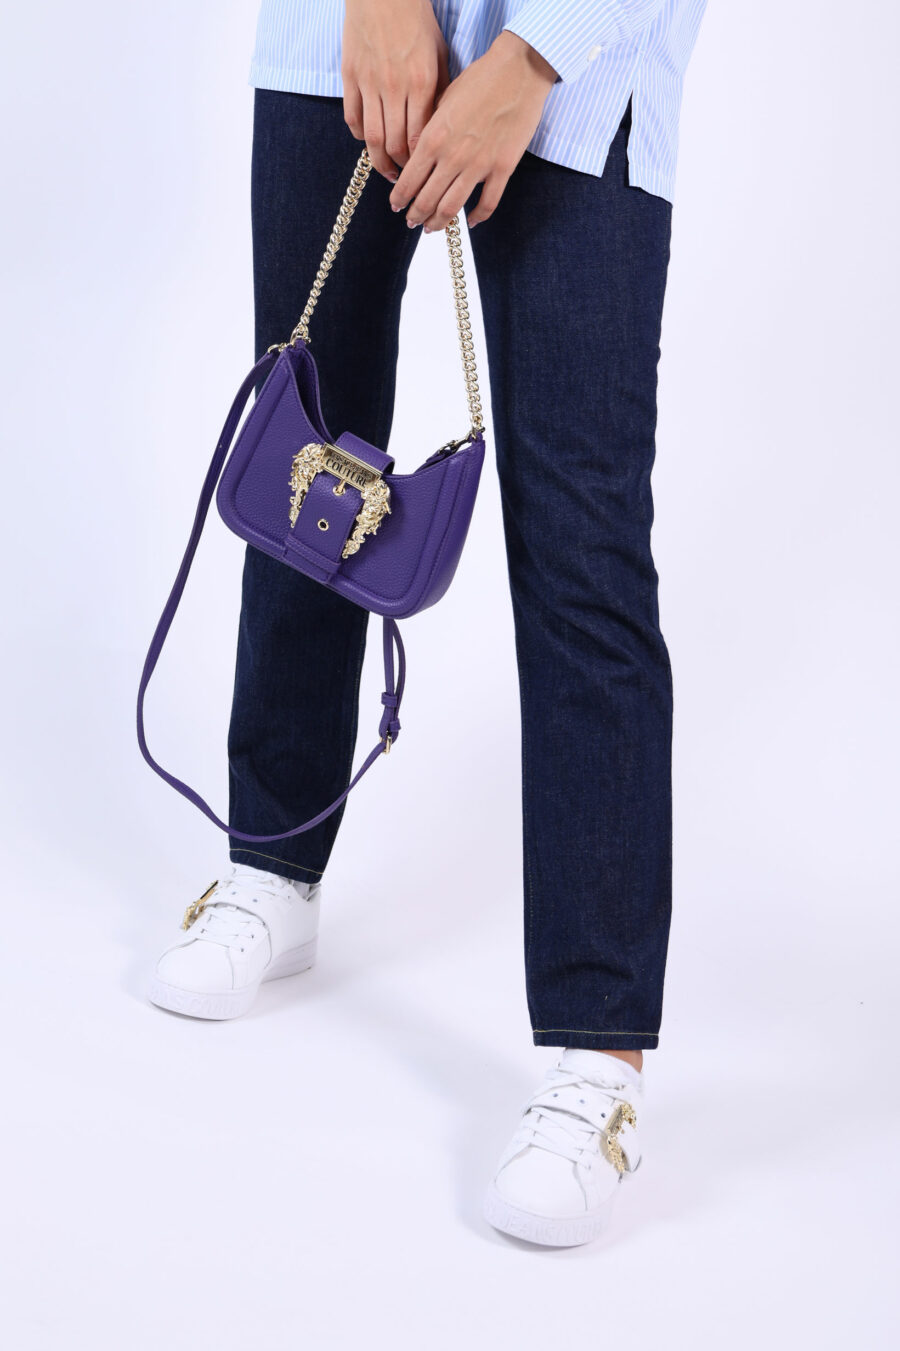 Versace Jeans Couture - Mala de ombro estilo hobo castanha com